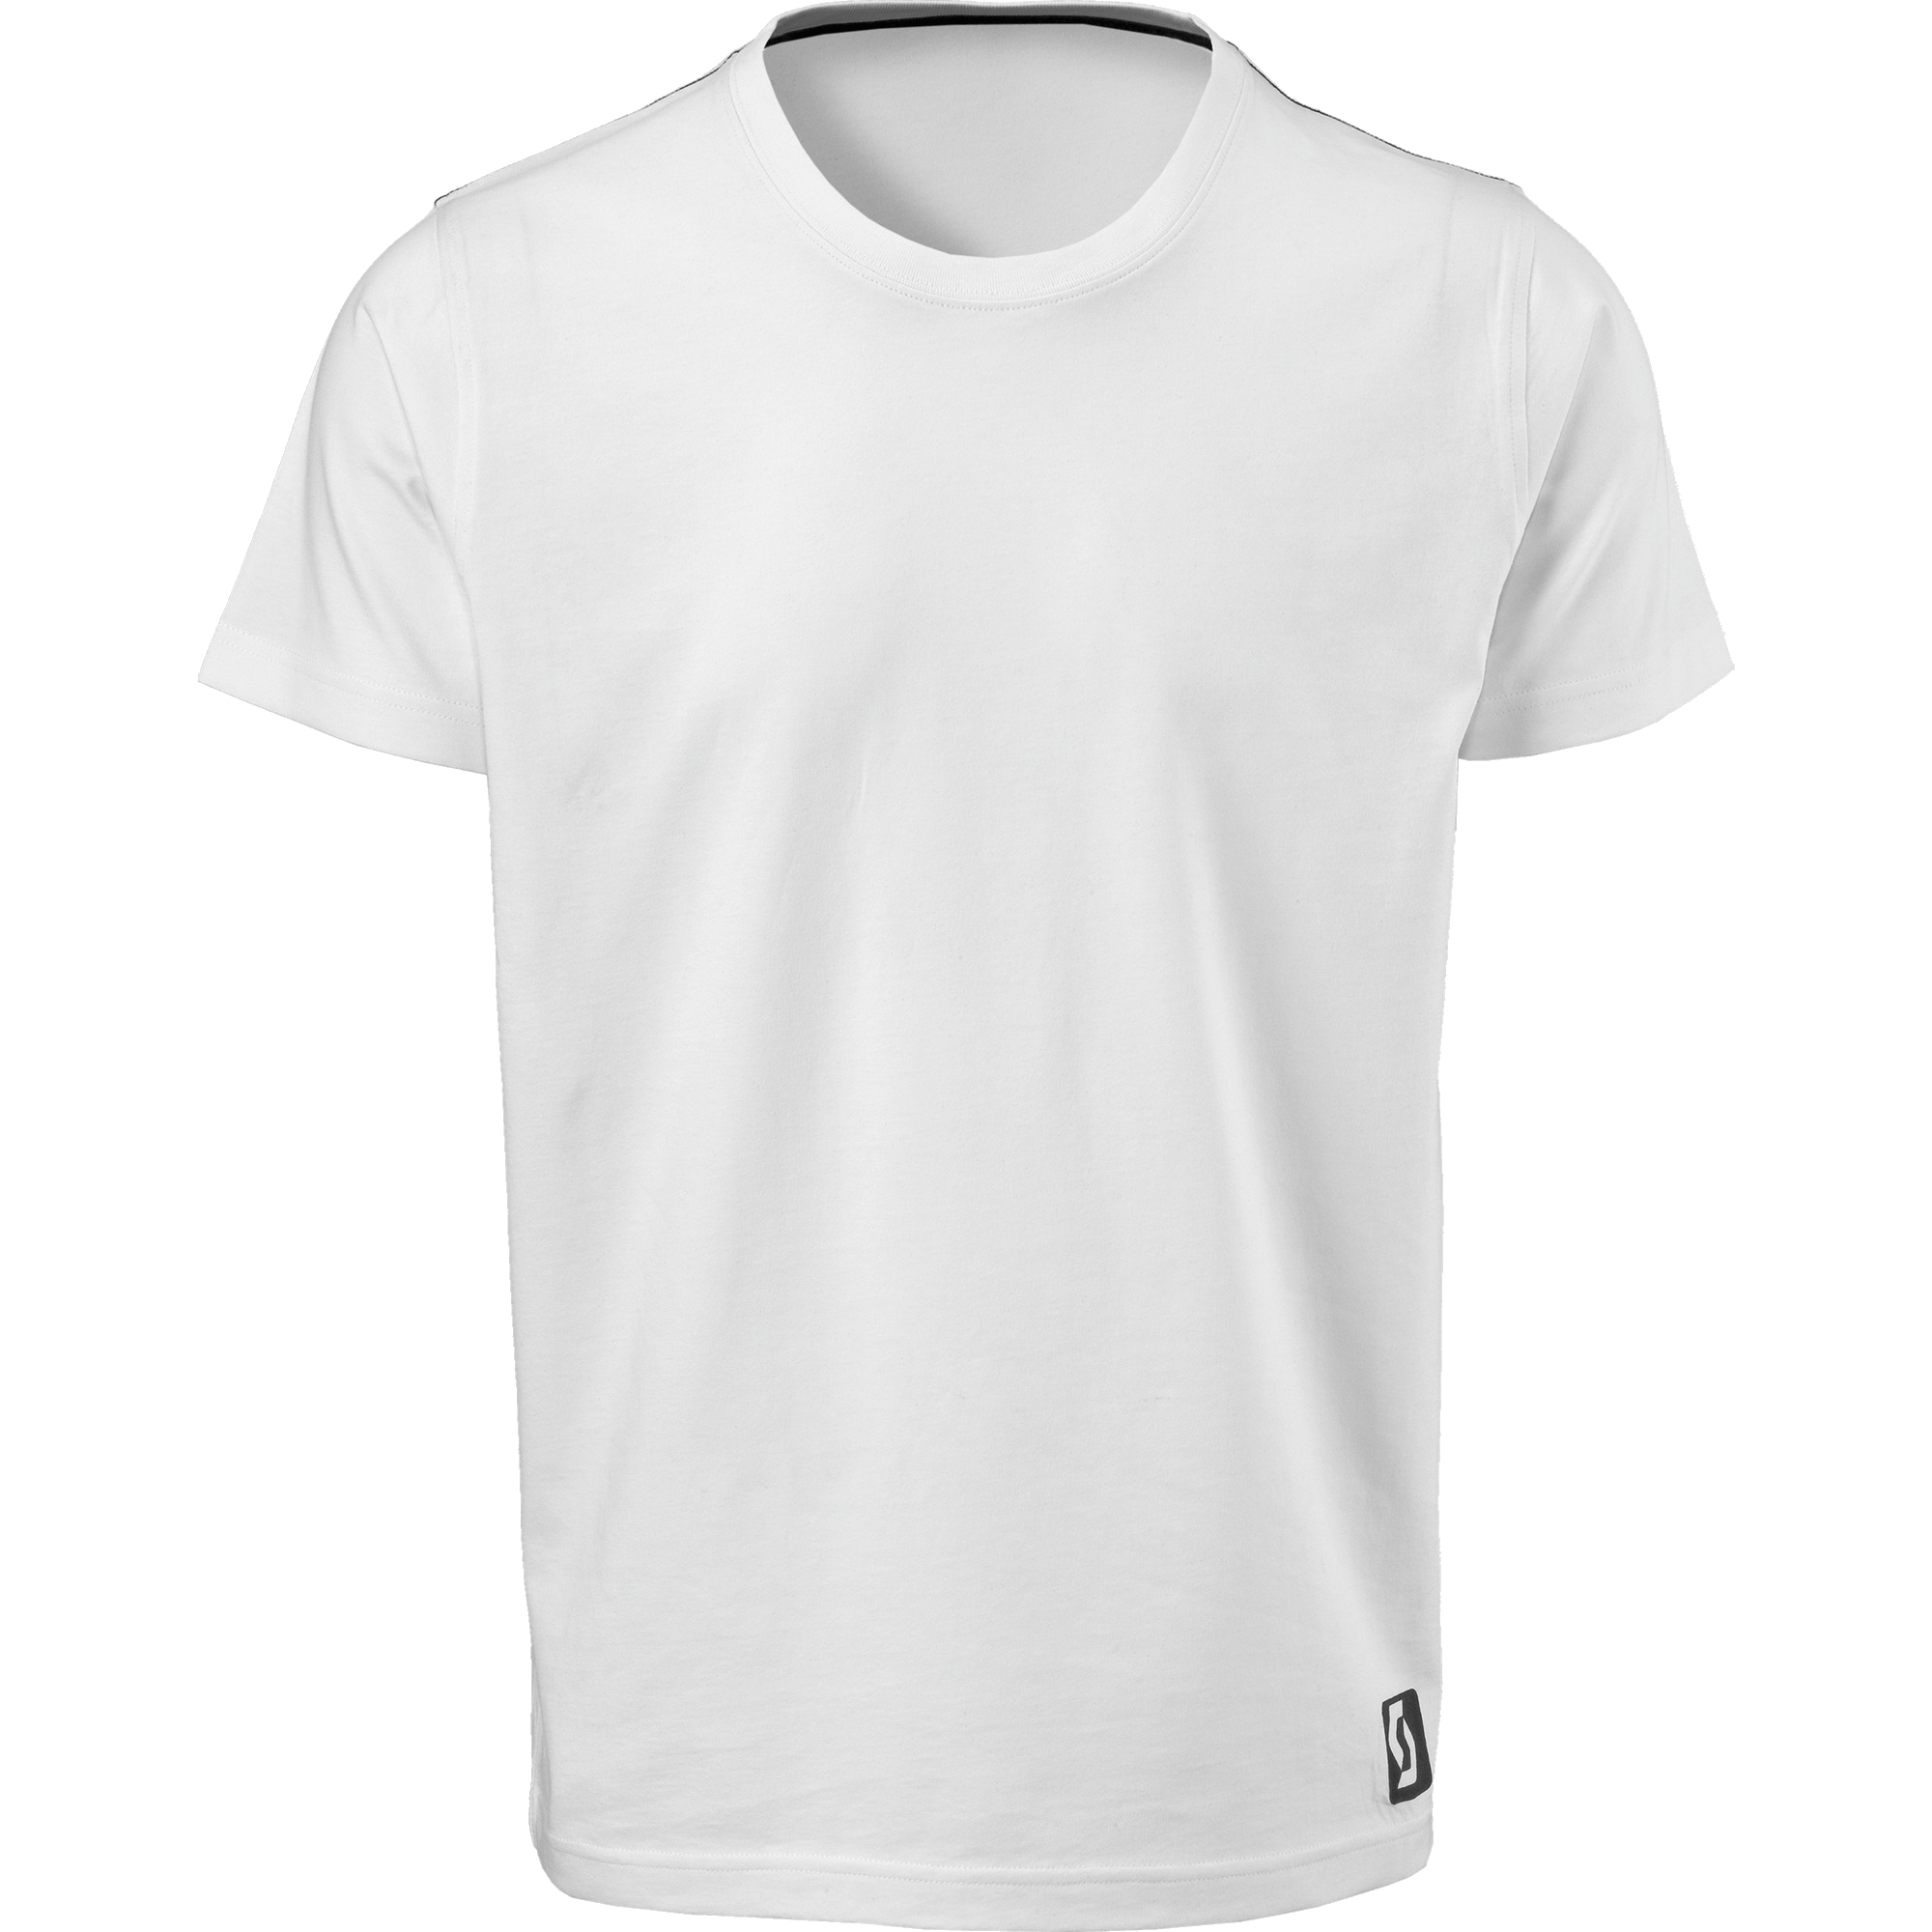 White Shirt Png White T-shirt Png Image | Venzero